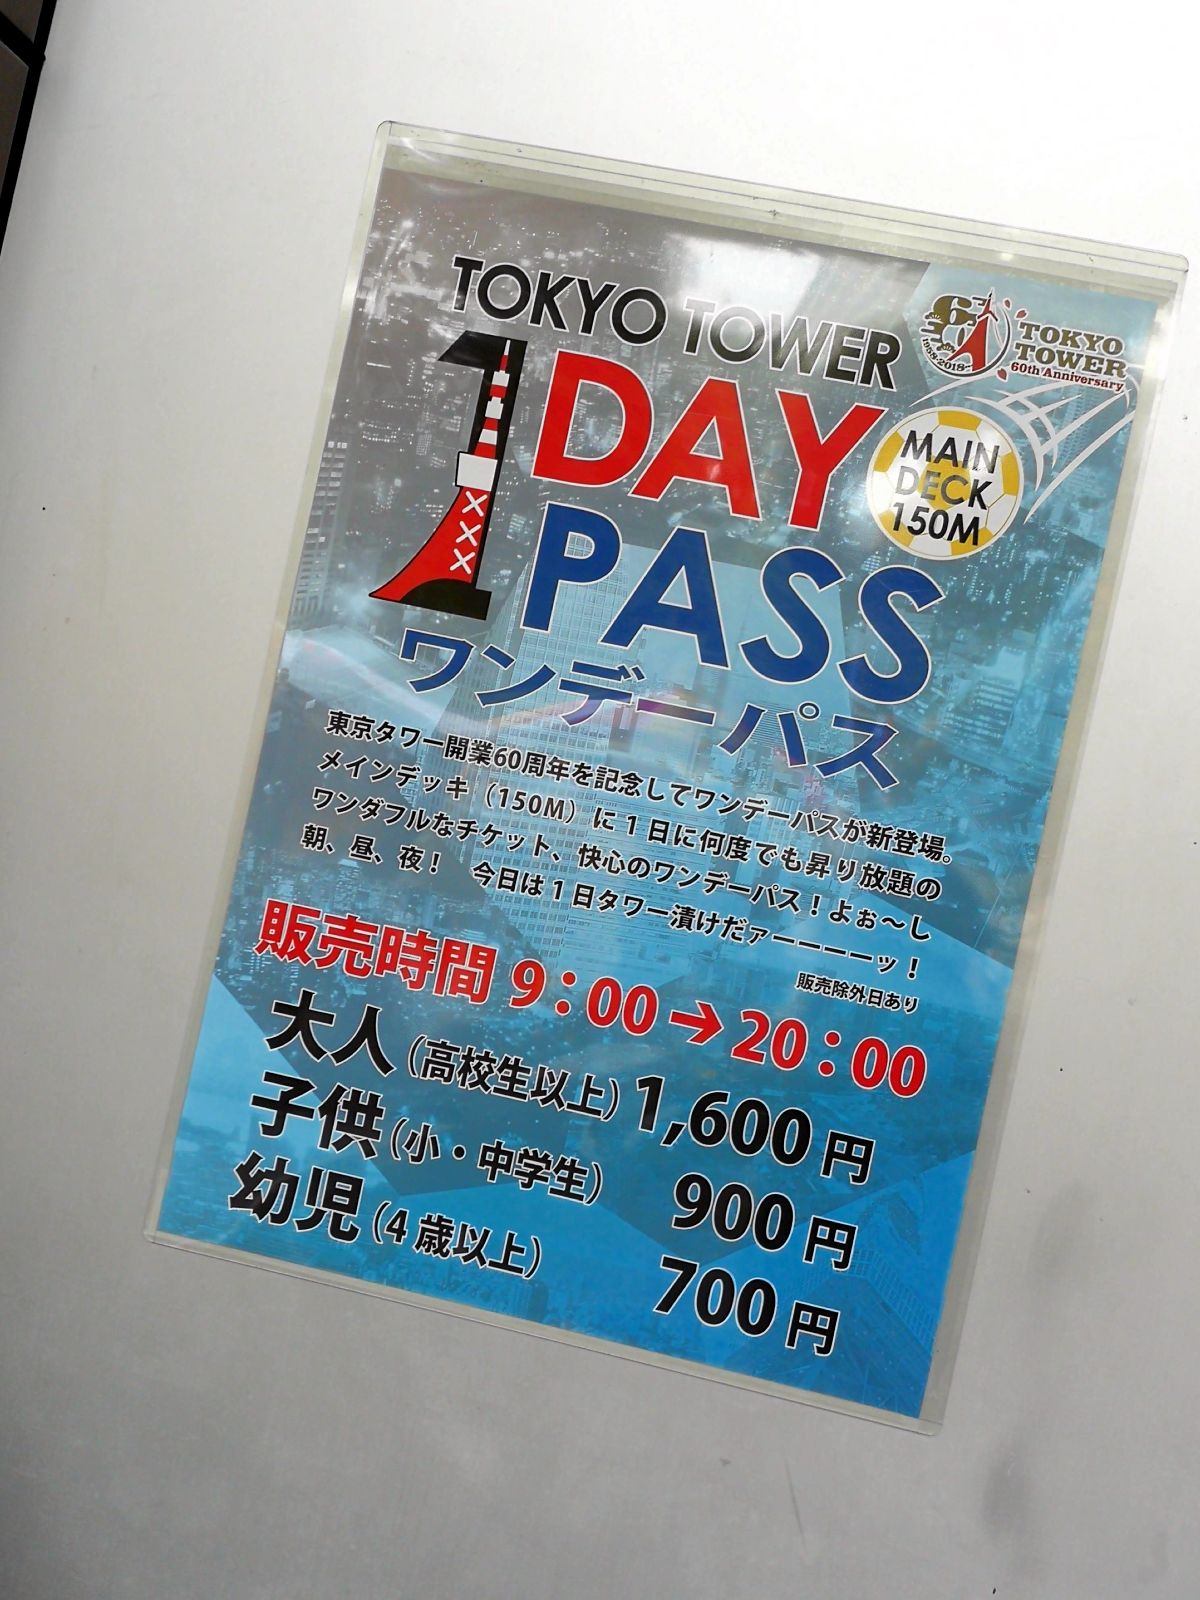 TOKYO TOWER 1 DAY PASS